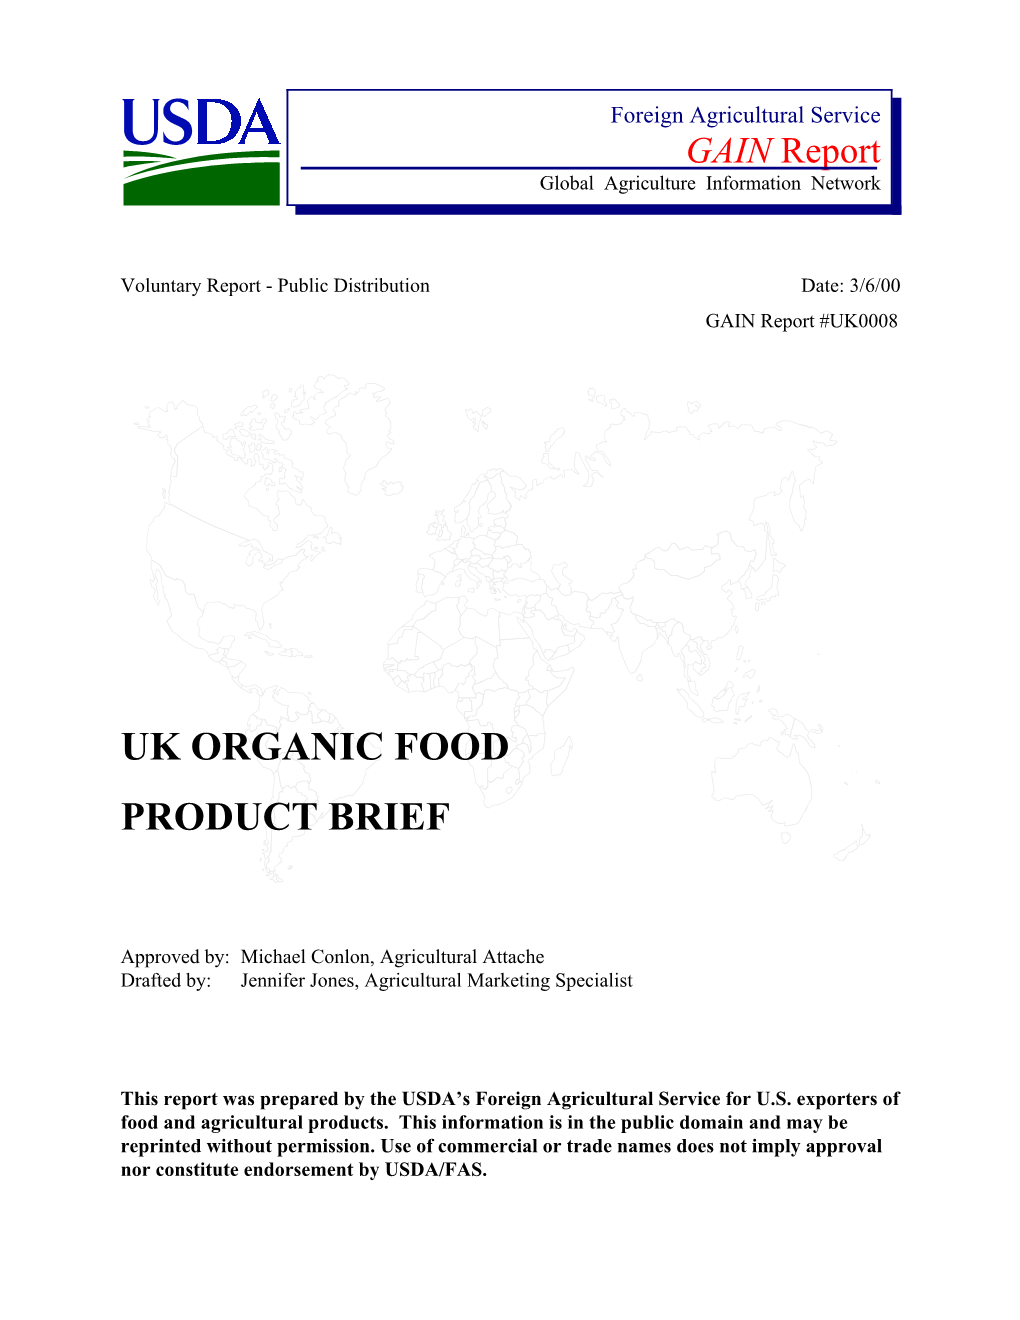 Uk Organic Food Product Brief